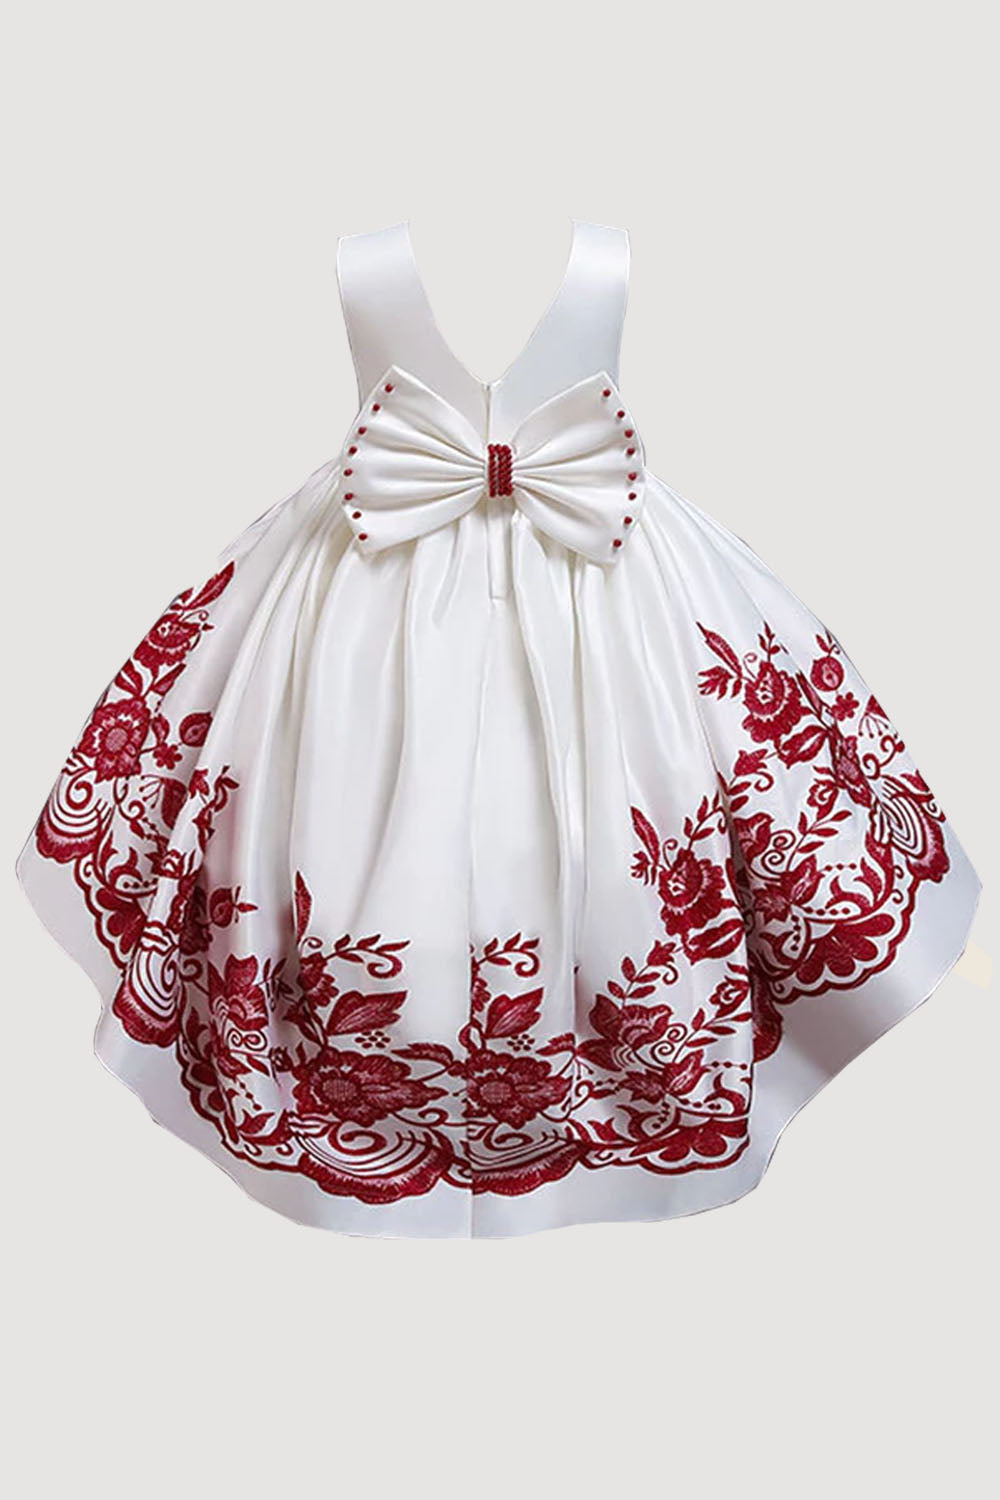 GIRLS - Red Floral Flocked Party Dress - Hannah Rose Vintage Boutique